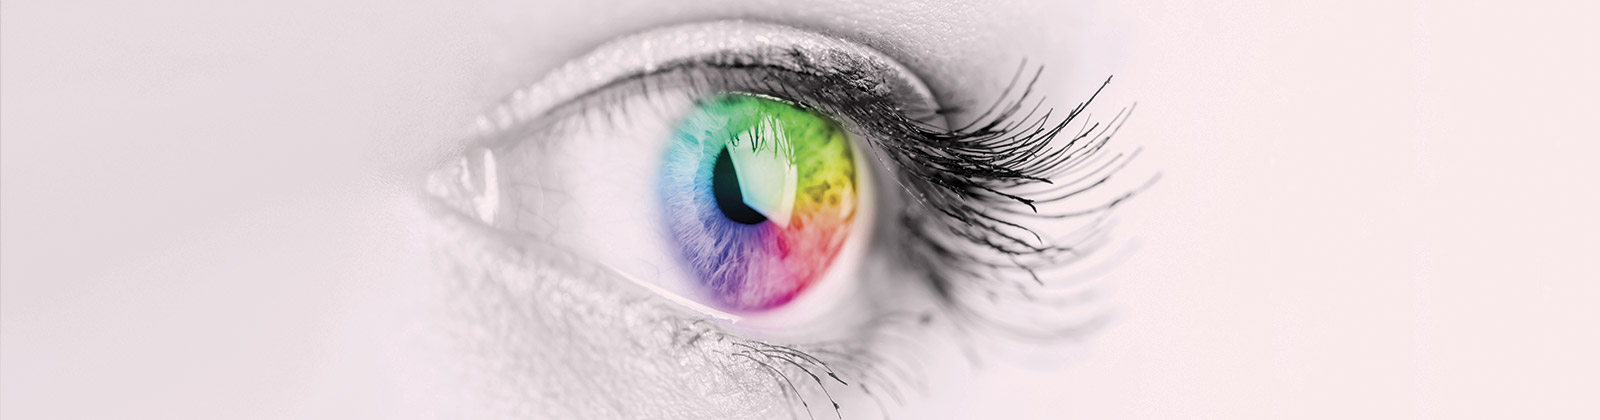 Eye with rainbow